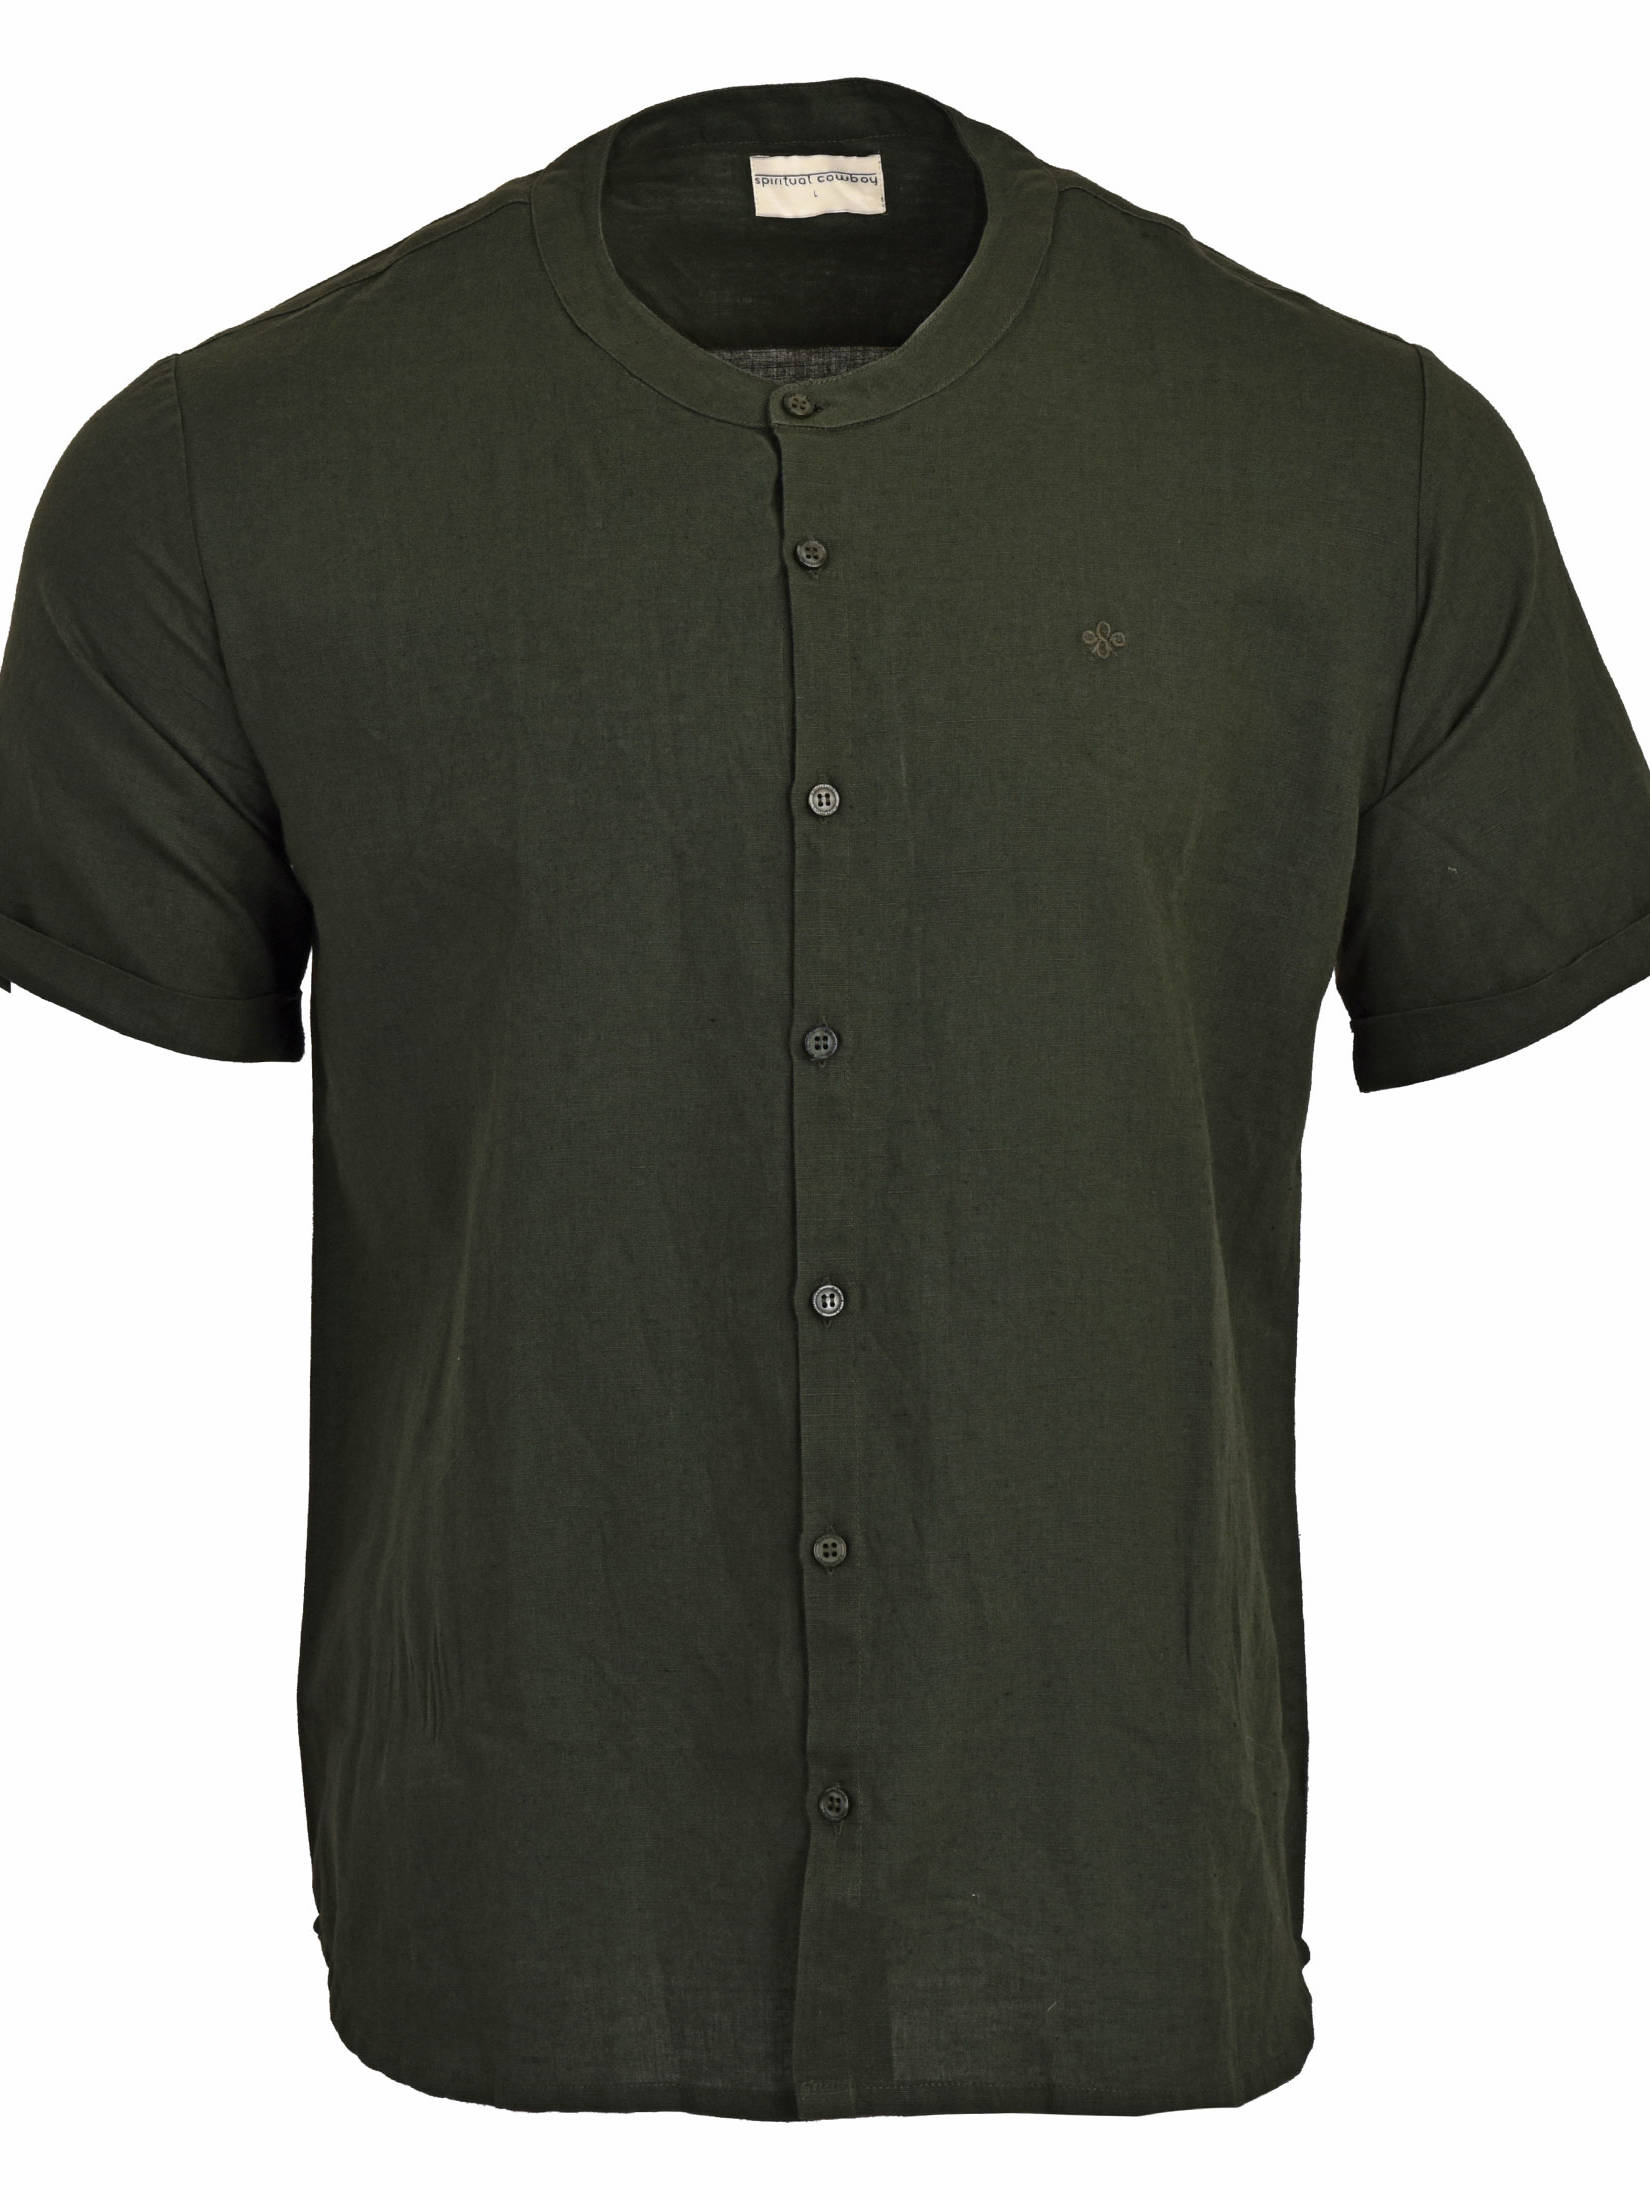 Madero Linen Shirt Short Sleeve Forest Green Front View